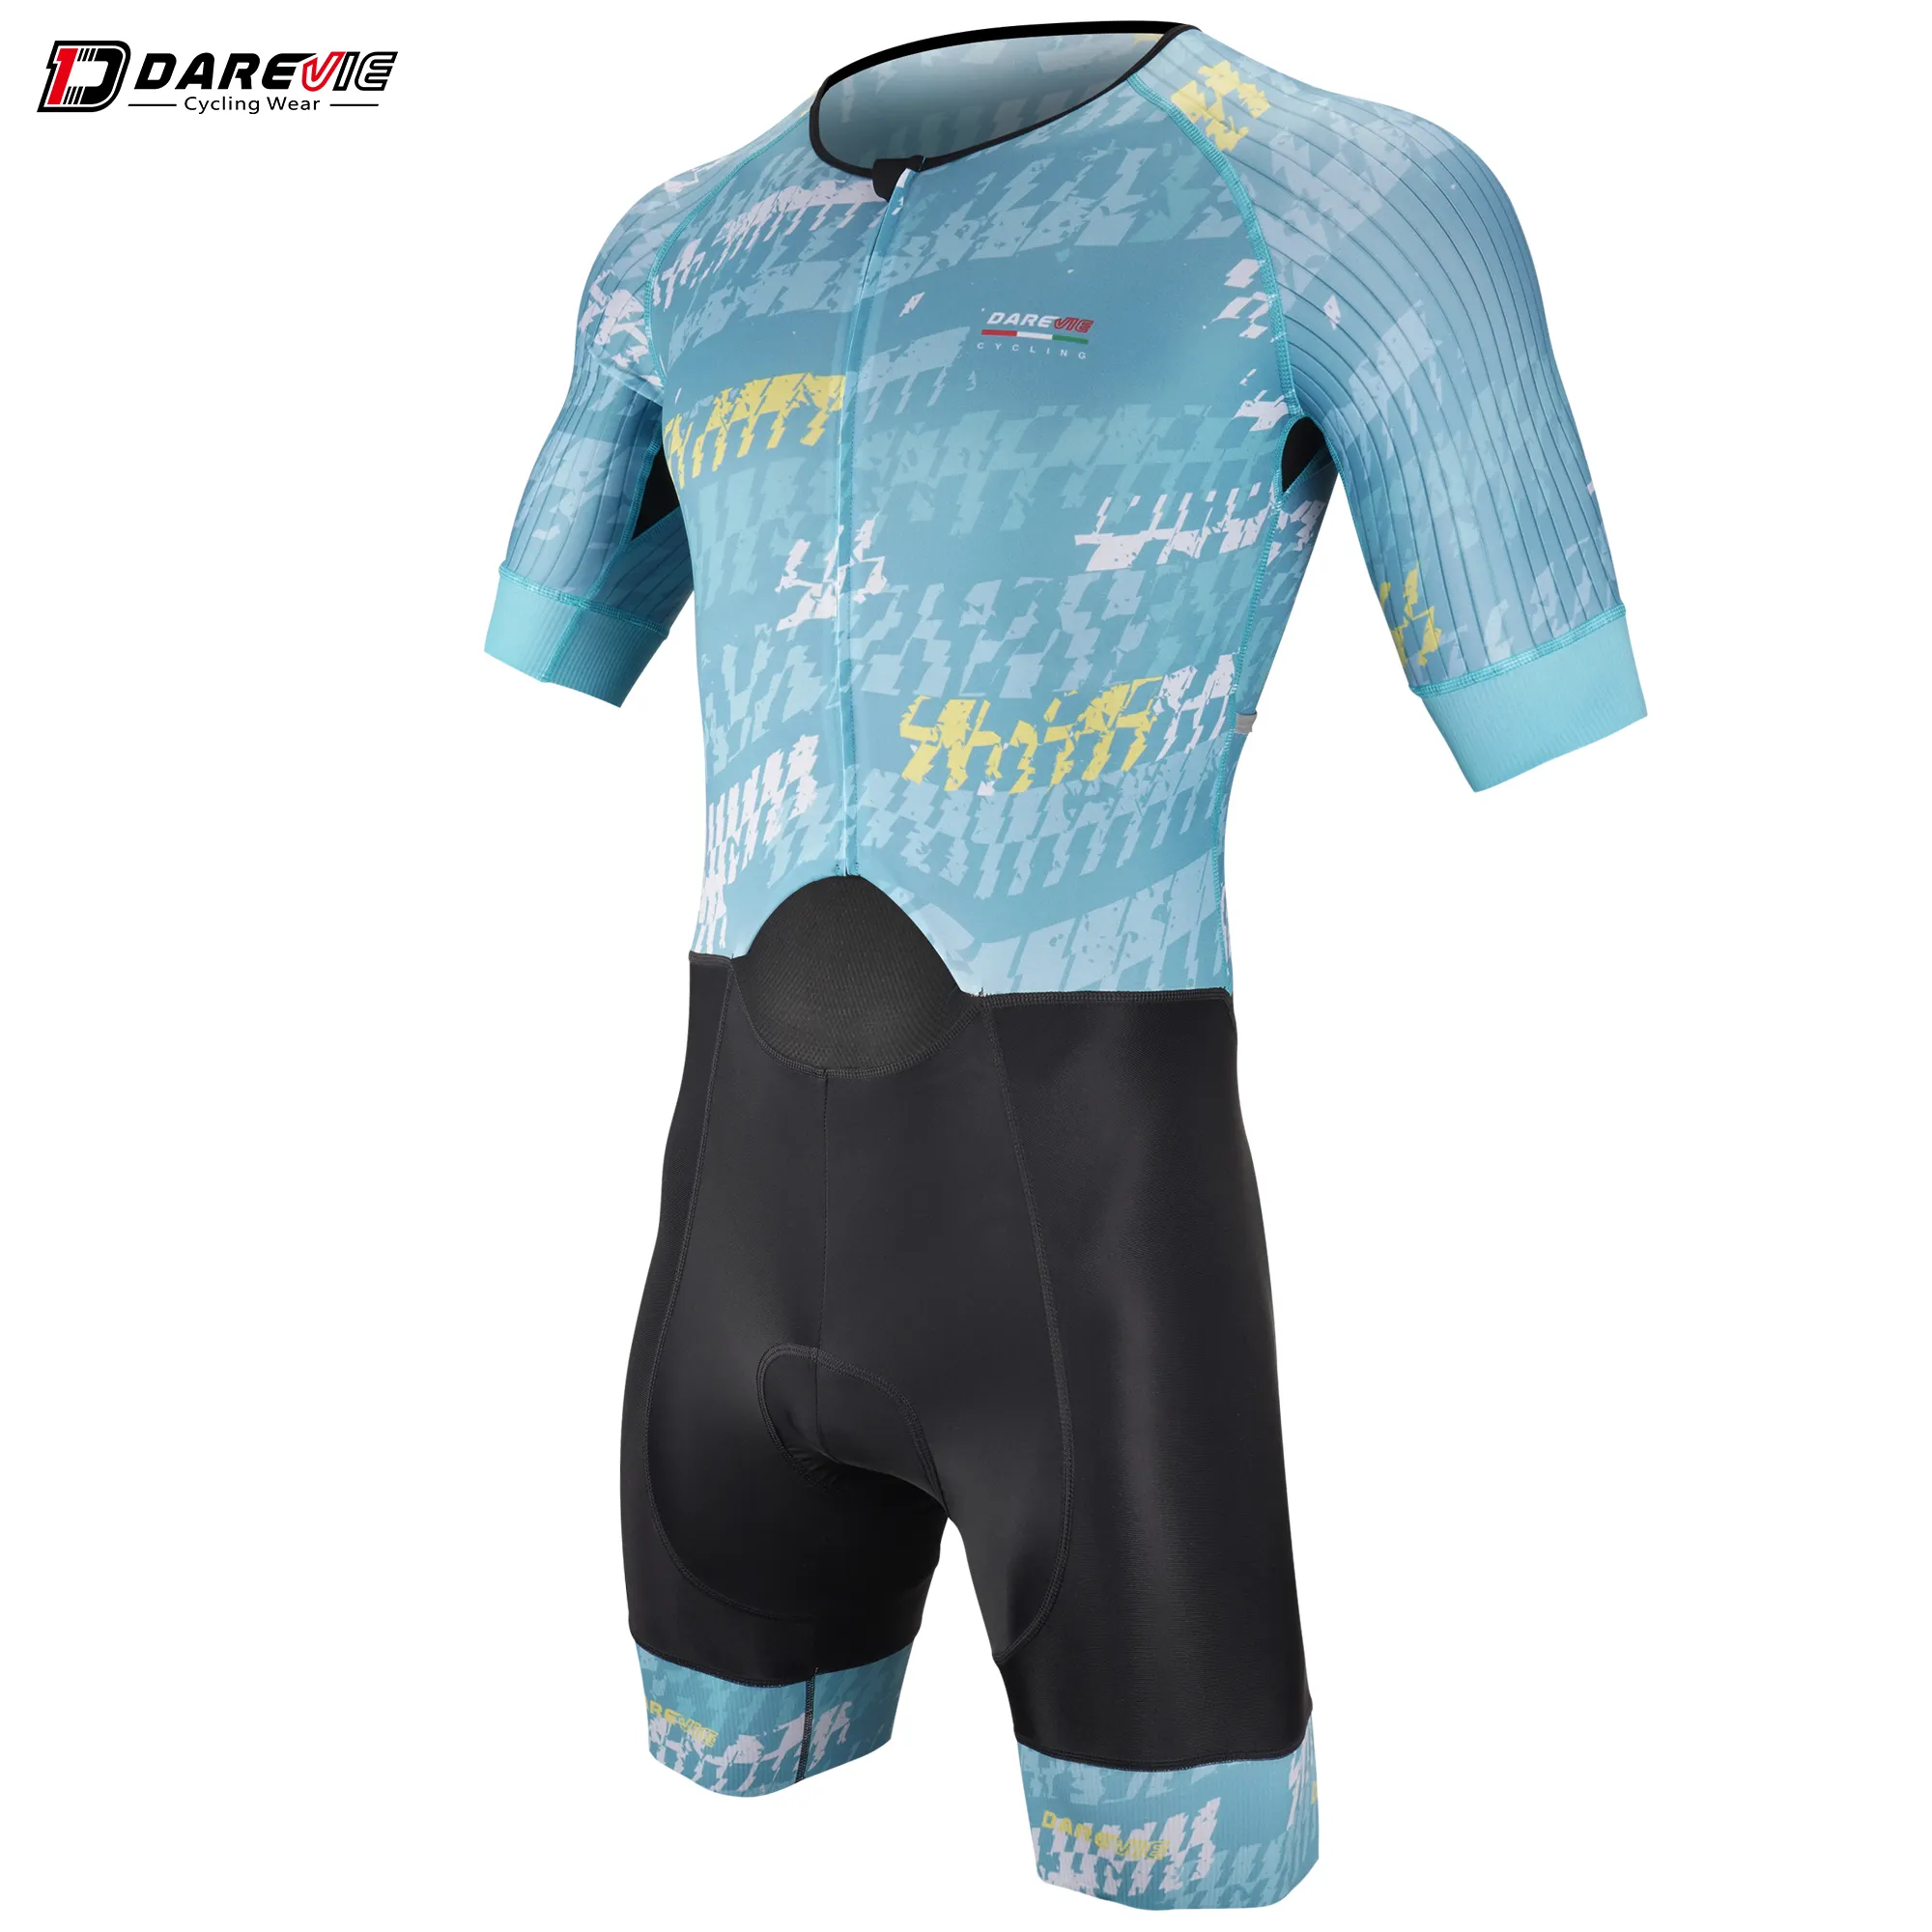 Darevie custom triathlon running triathlon suit sport wear bicycle trisuit ropa de ciclismo cycling jersey wear skin suit